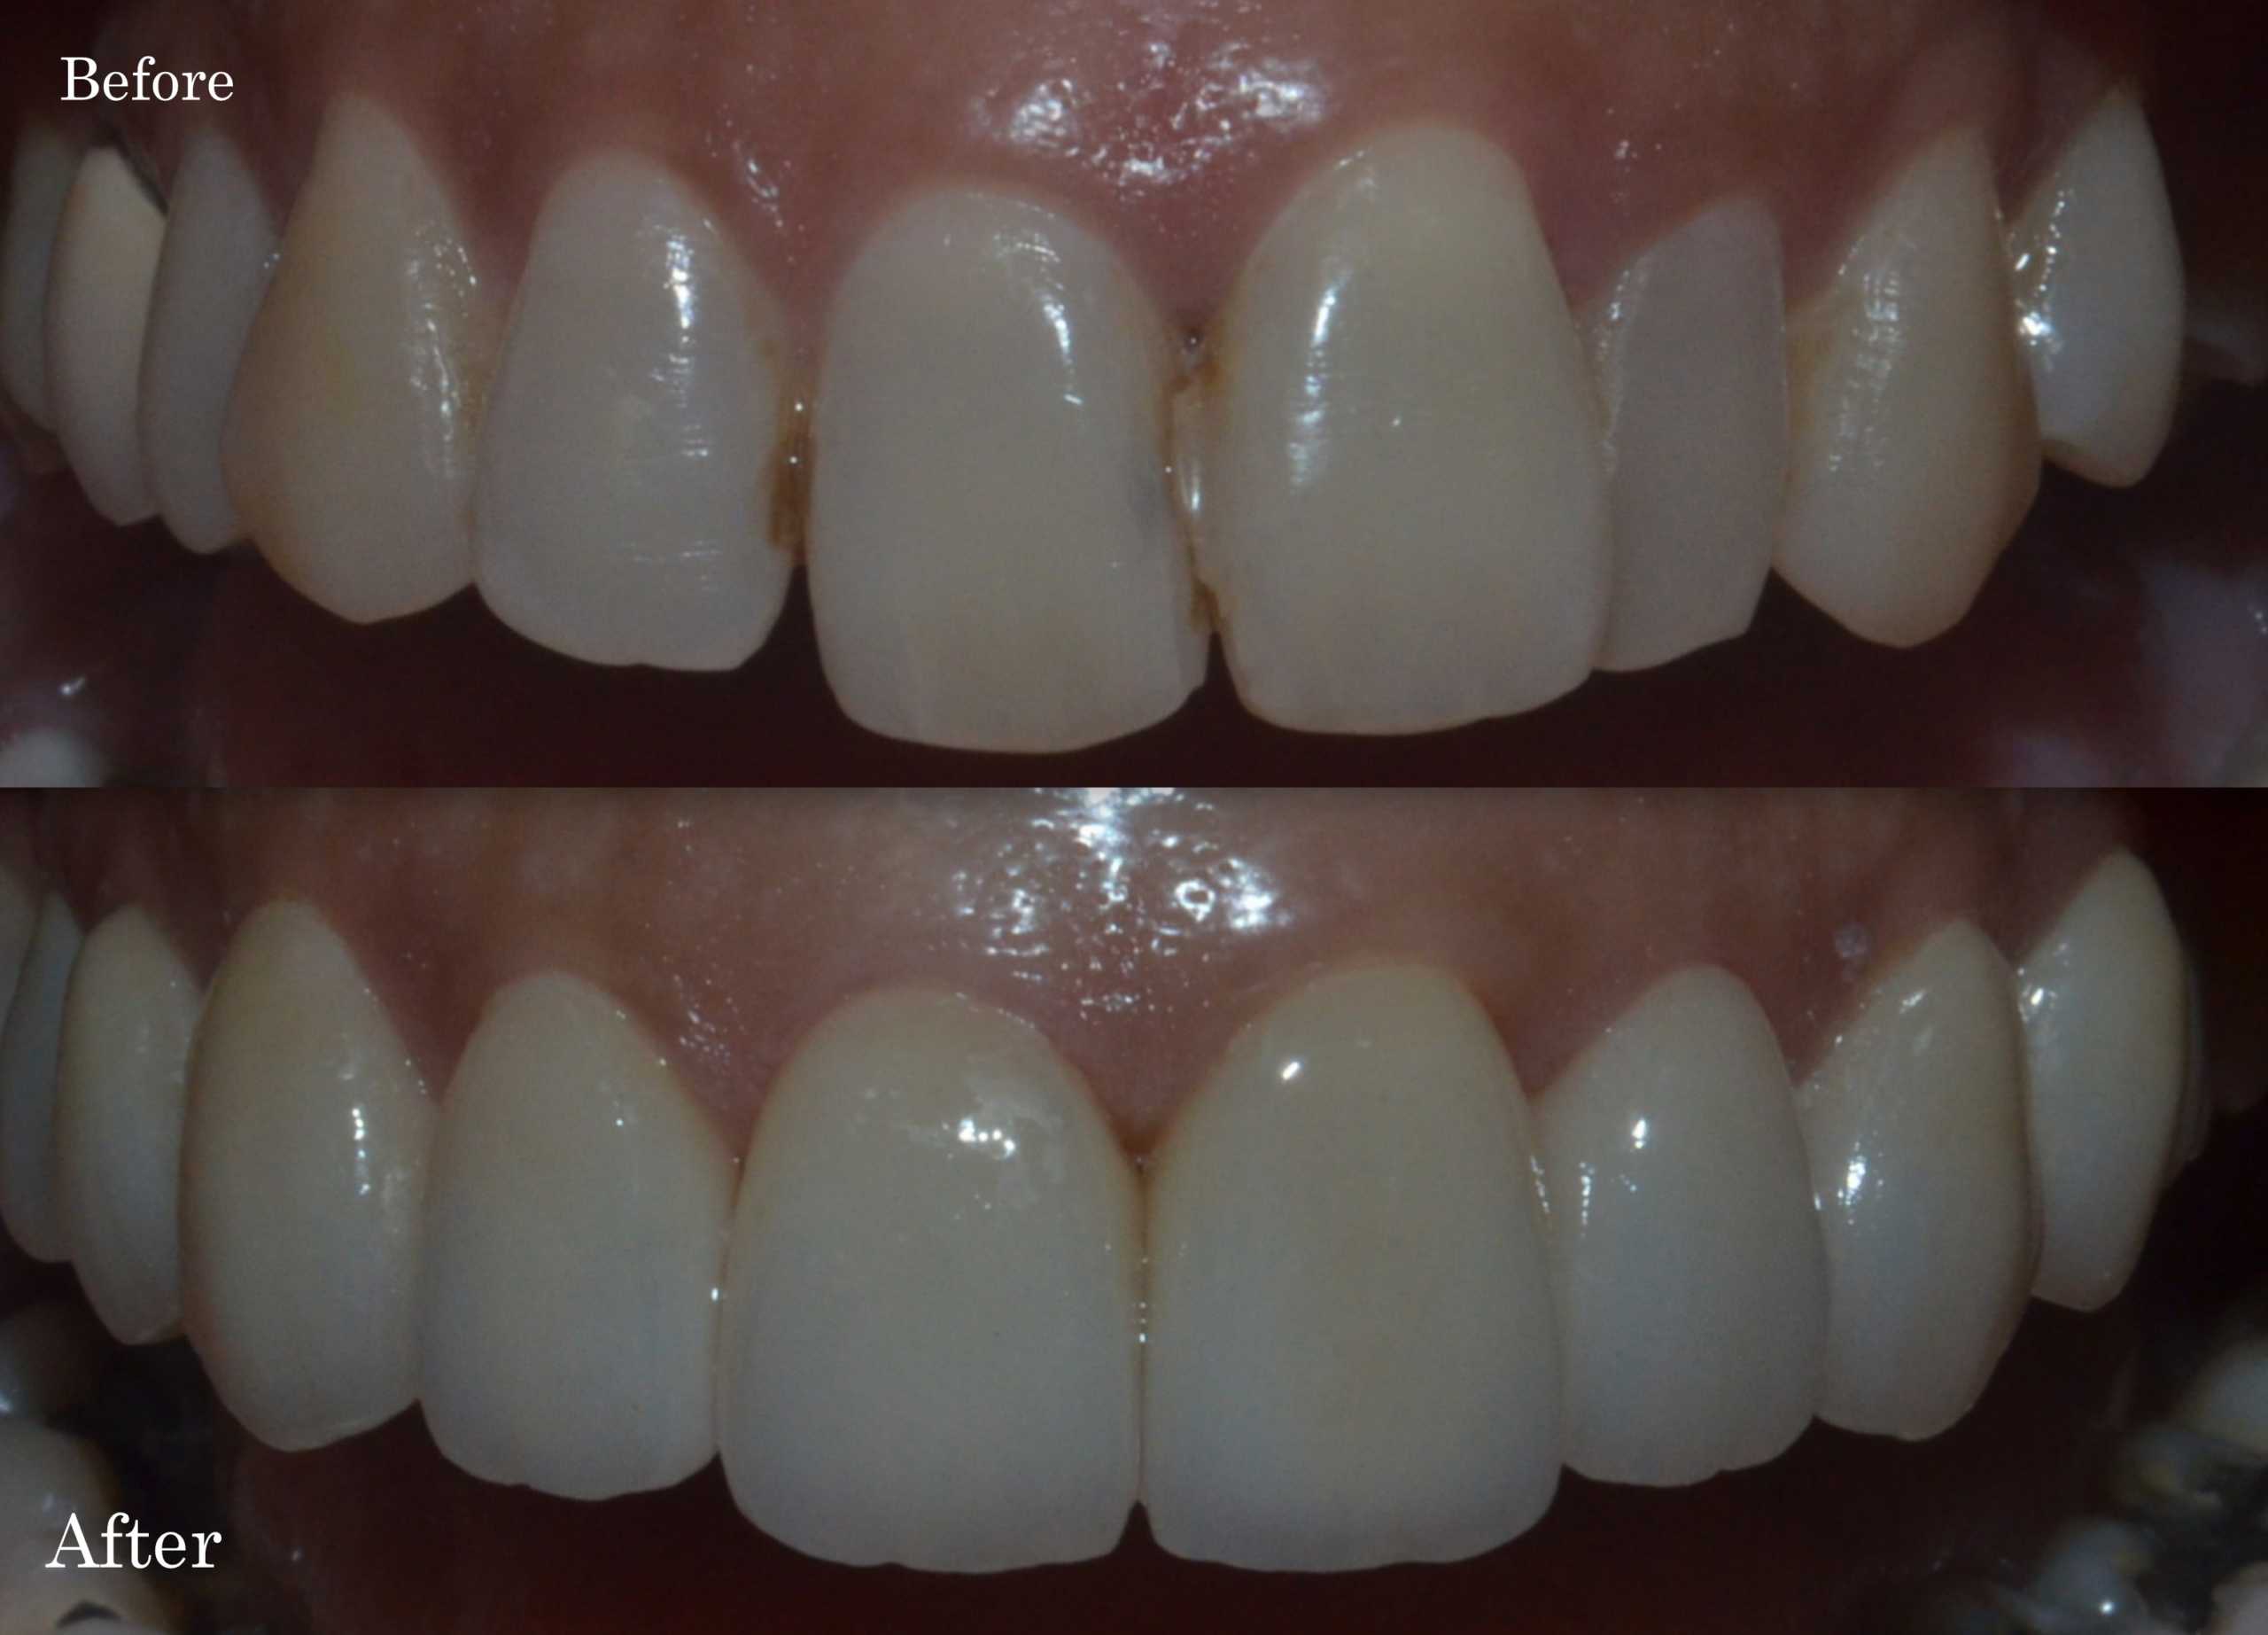 Porcelain veneers to align and make teeth cavity free